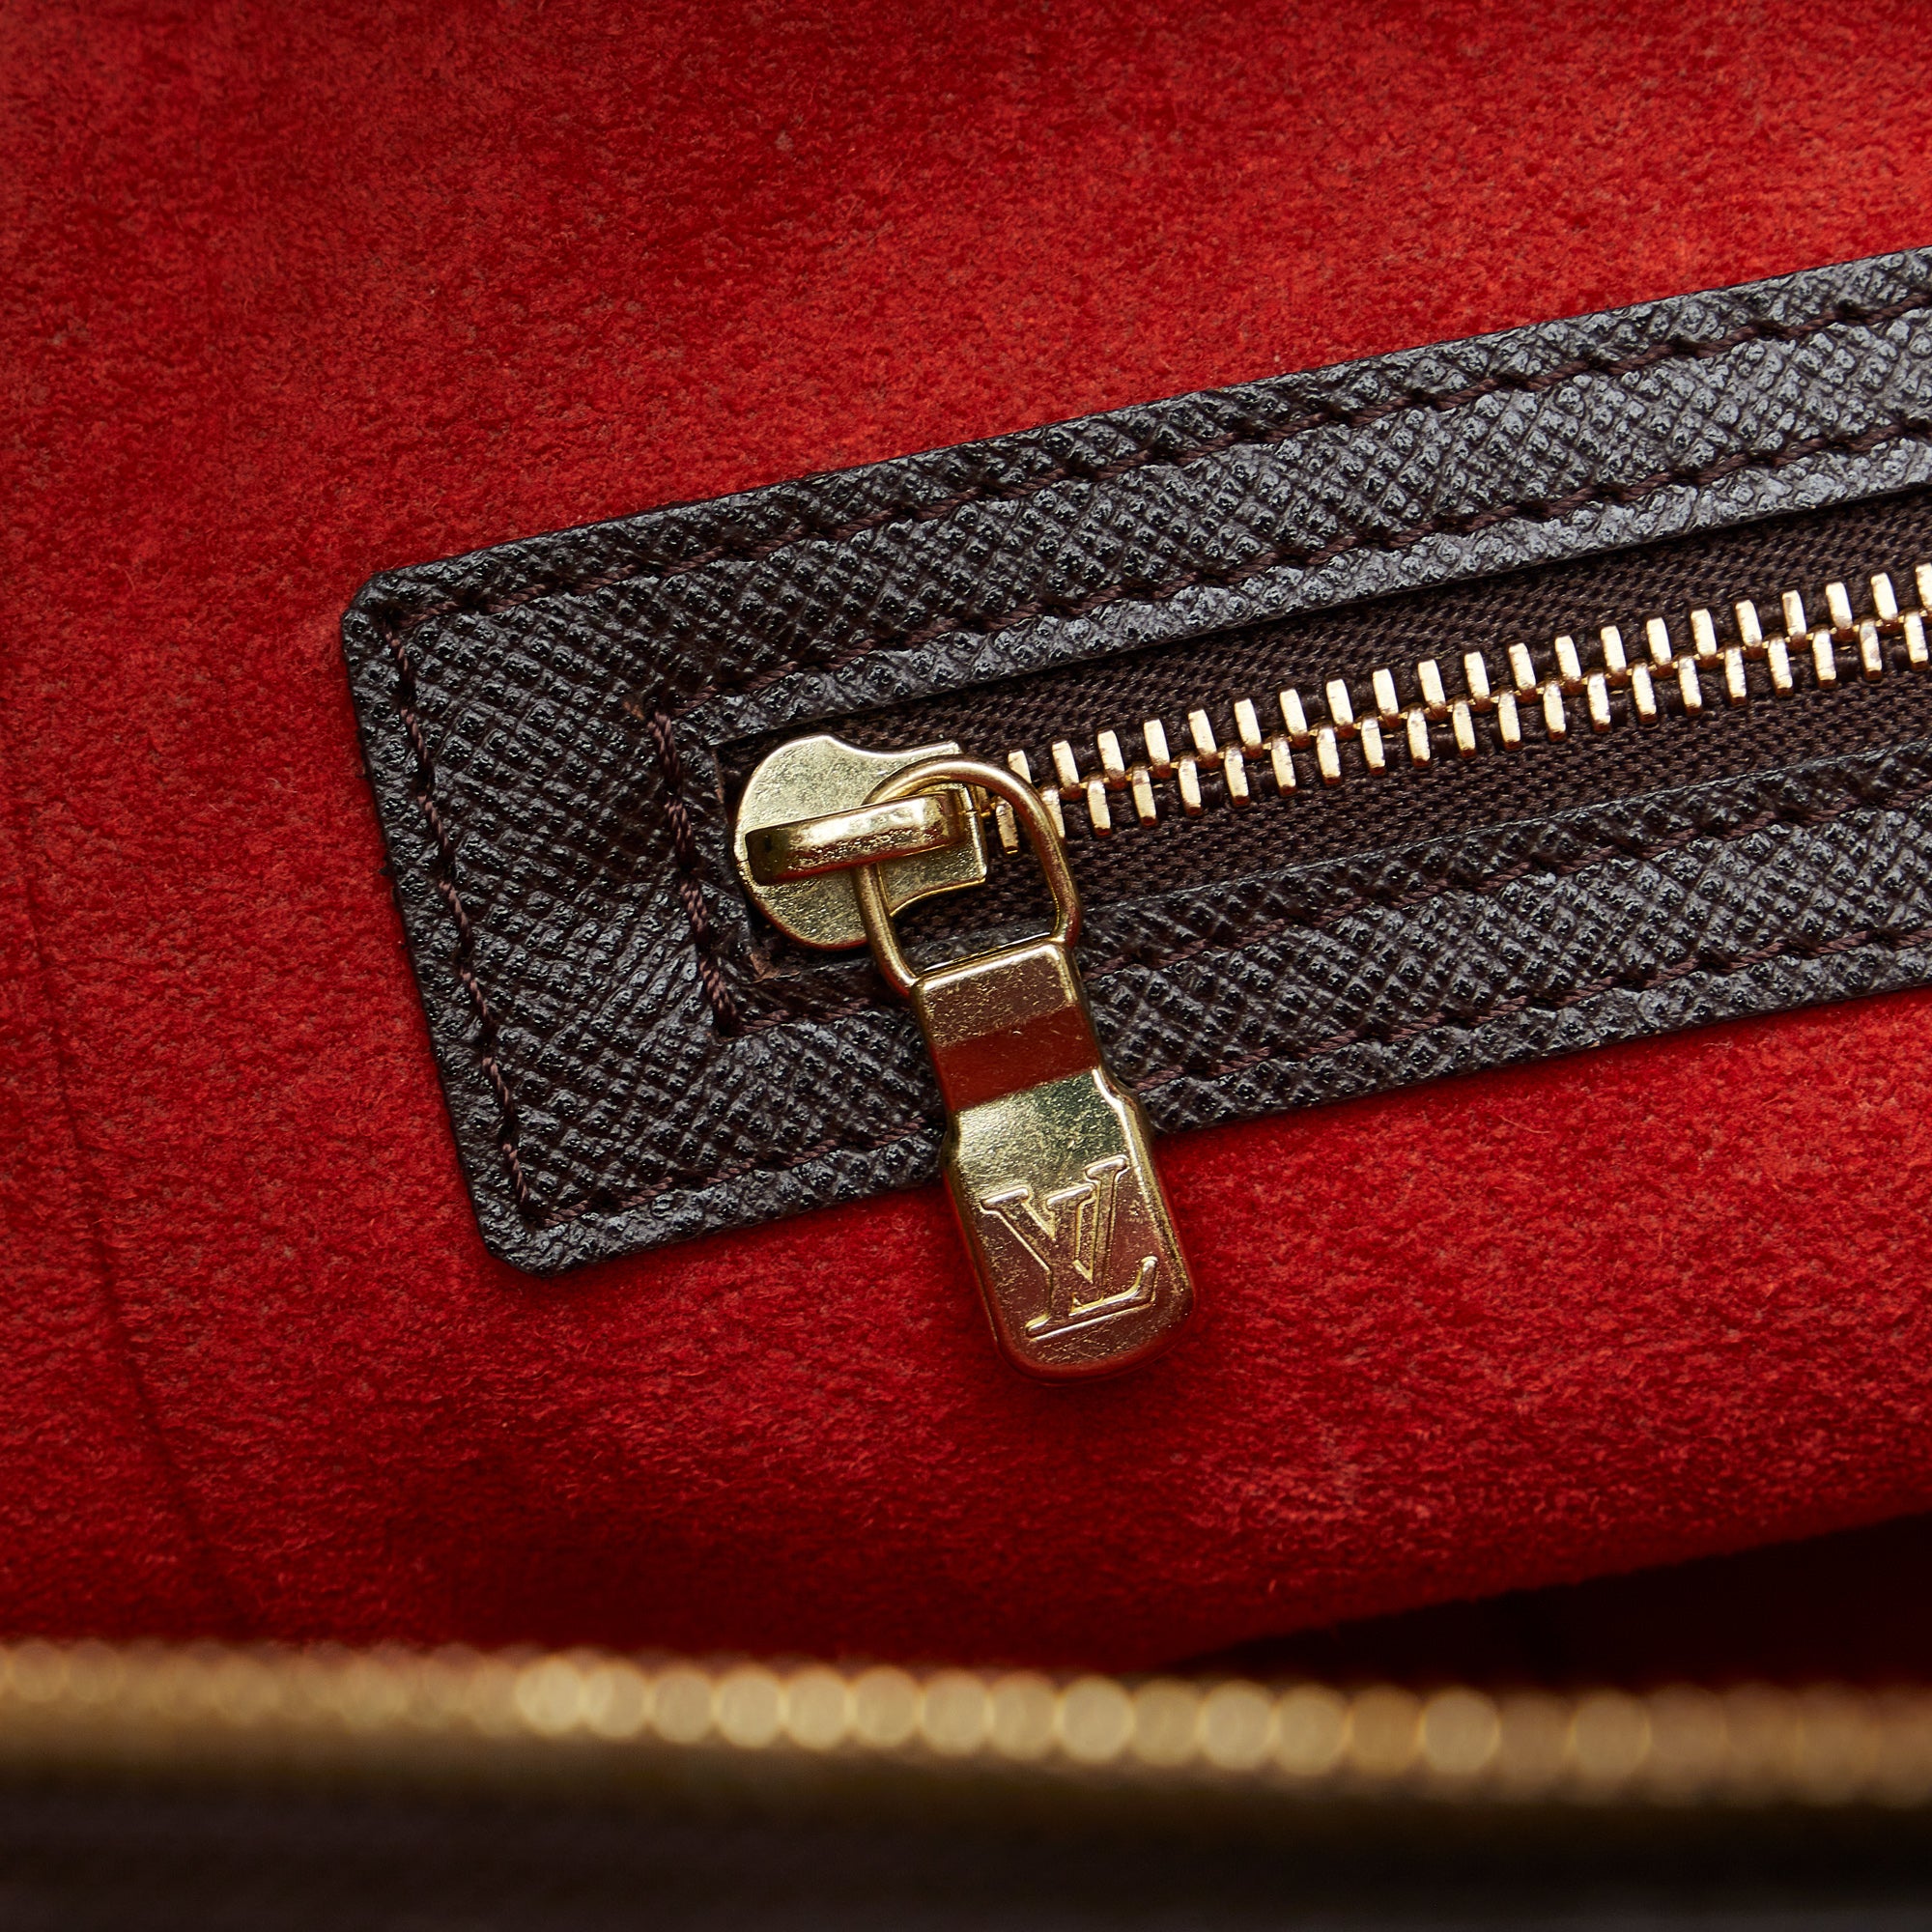 Louis Vuitton Brera Damier Ebene Handbag 100% Authentic for Sale